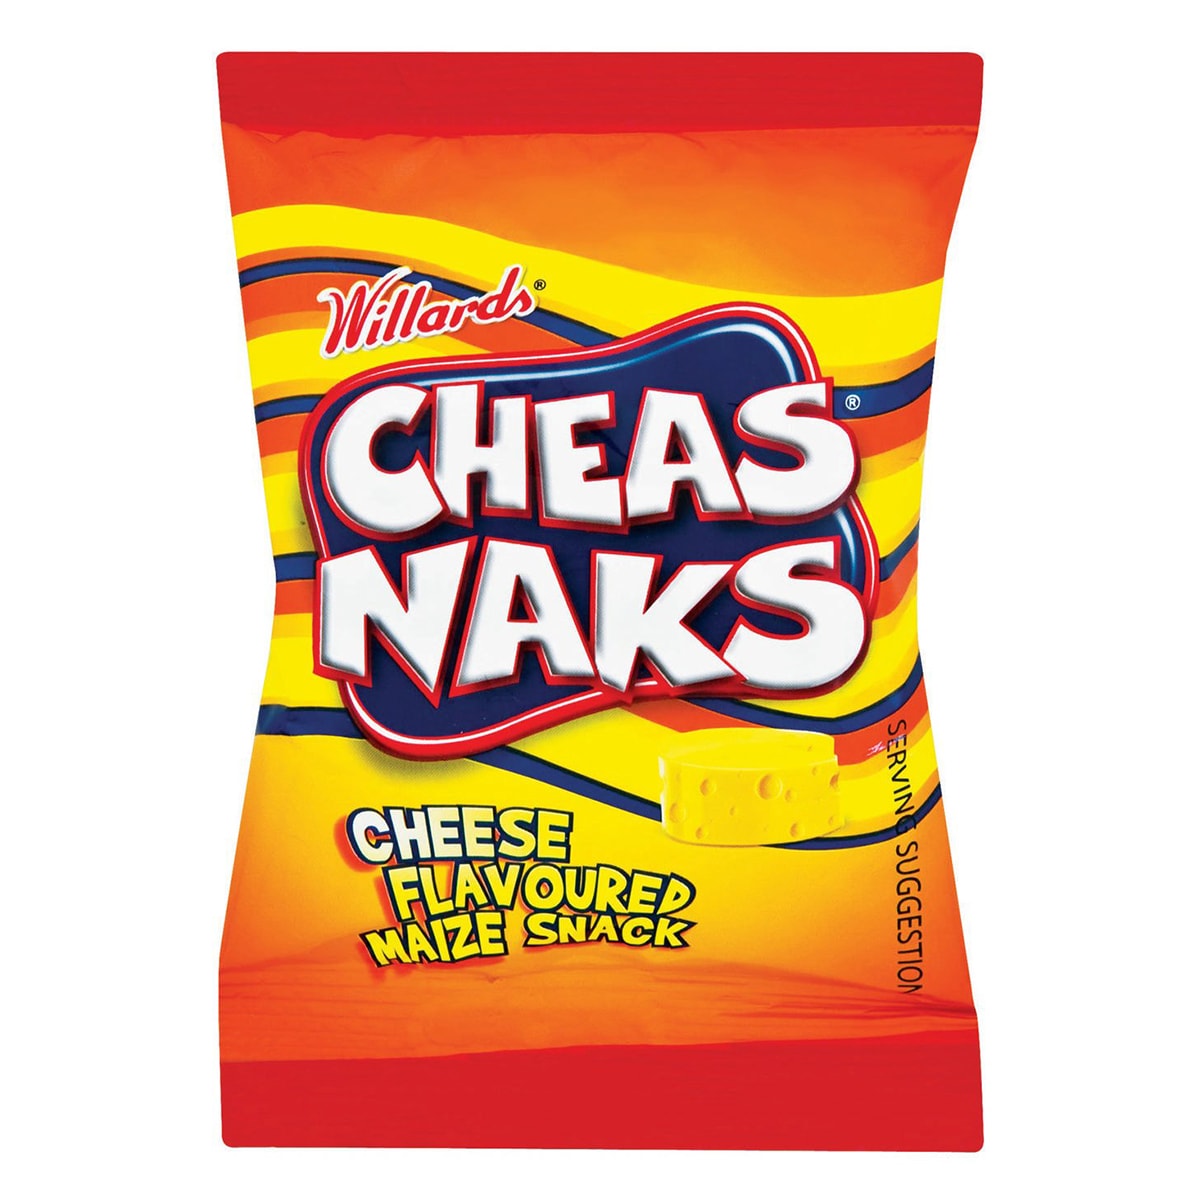 Buy Willards Cheas Naks Cheese Flavoured Maize Snack - 150 gm